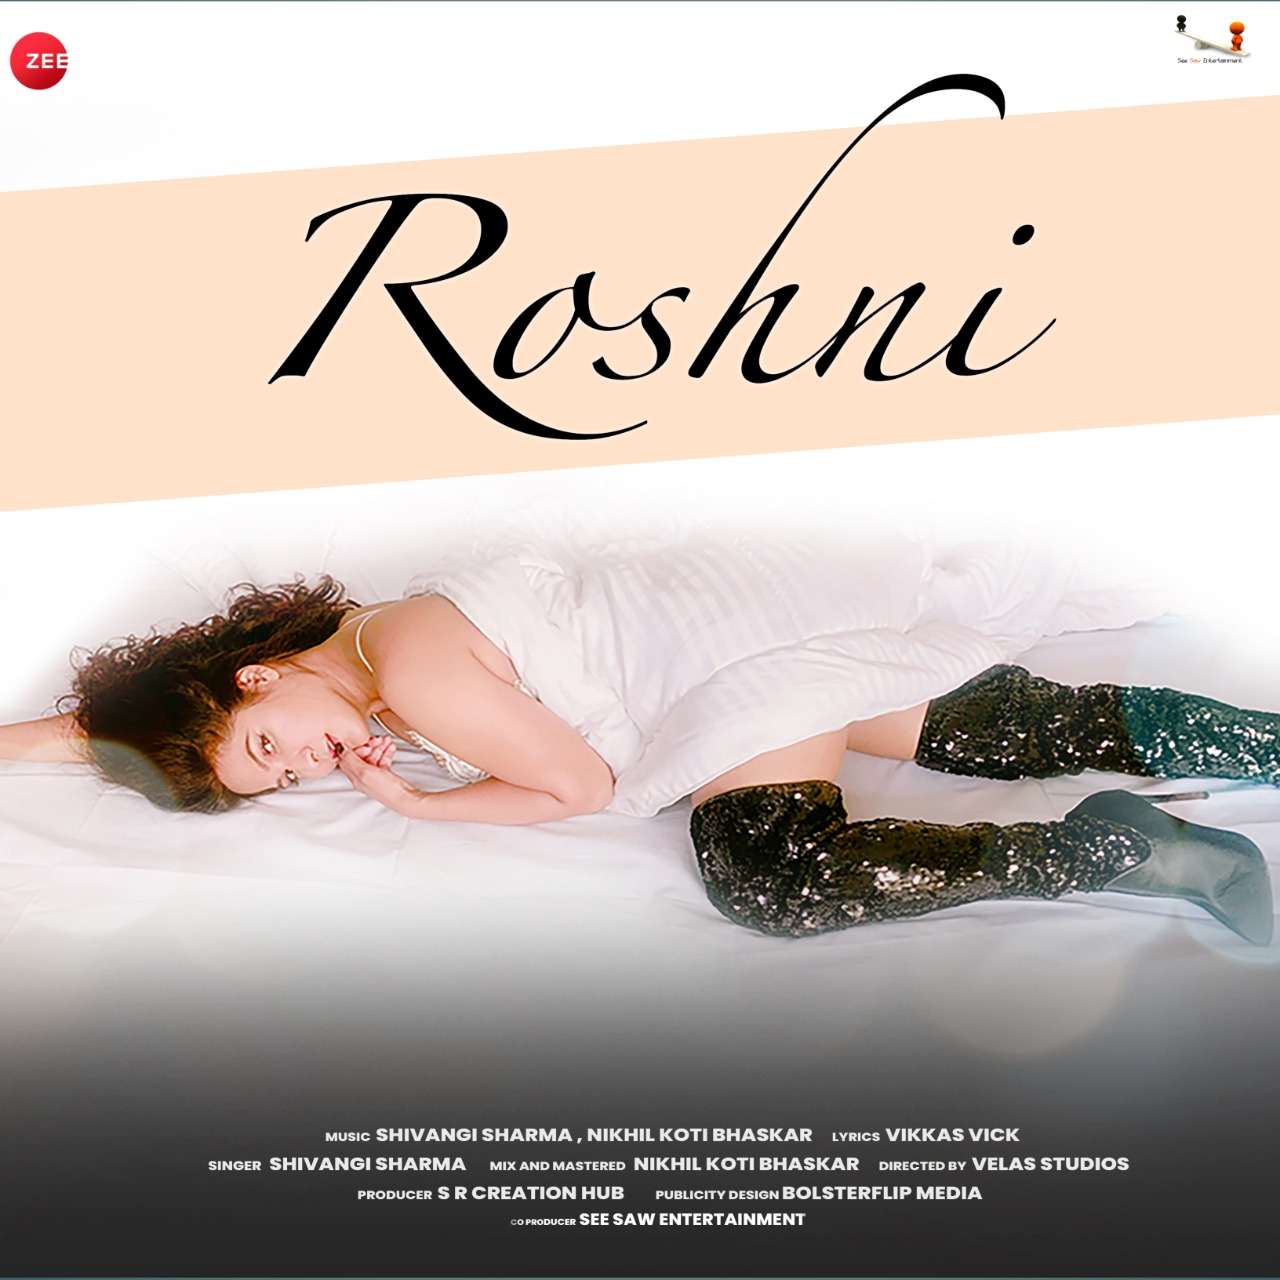 Shivangi Sharma's new Hindi romantic song 'ROSHNI' is out now